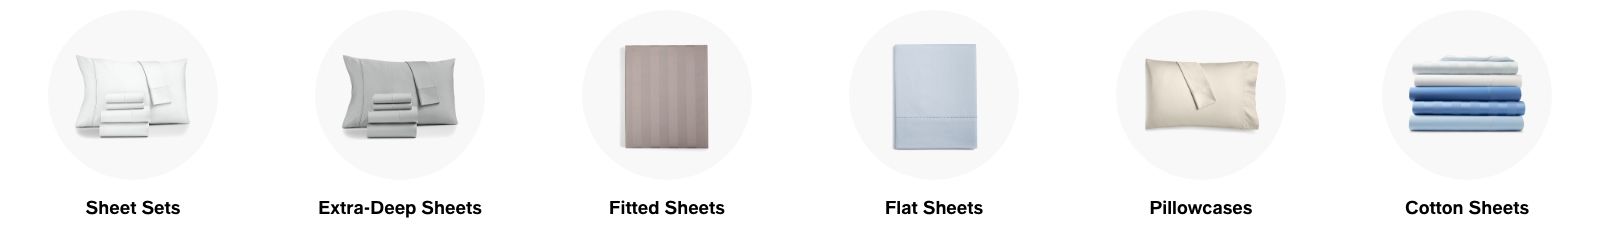 Sheet Sets, Extra-Deep Sheets, Fitted Sheets, Flat Sheets, Pillowcases, Cotton Sheets